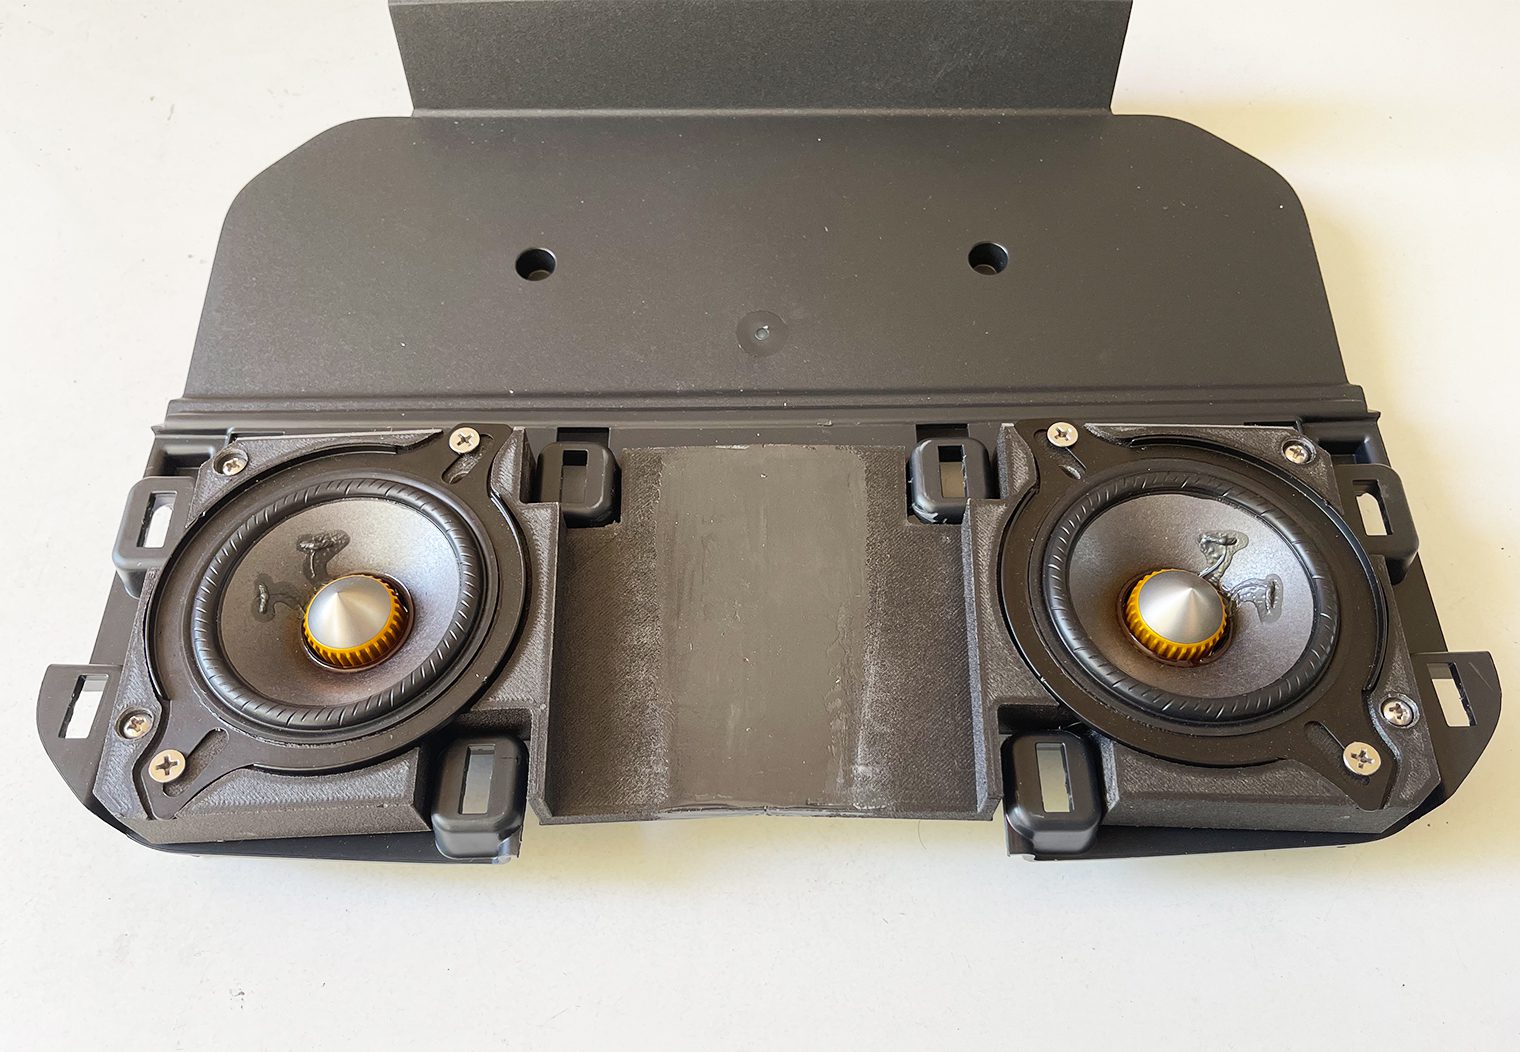 2021 F-150 Custom Center Dash Speaker Panel Final Product Angle